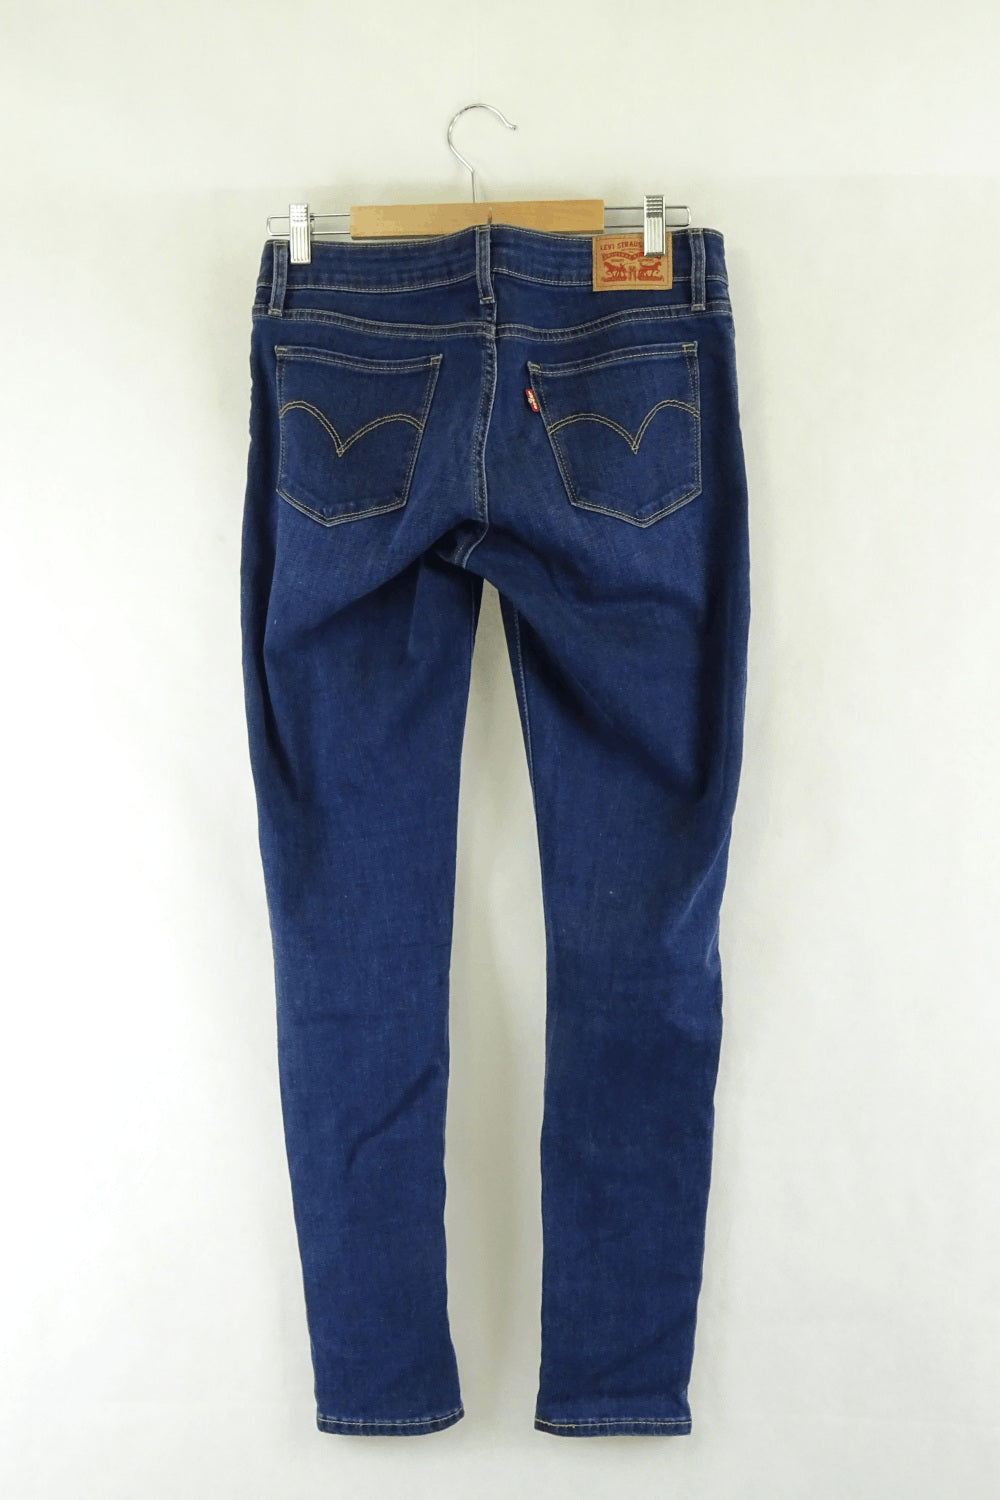 Levis 711 Blue Skinny Jeans 29